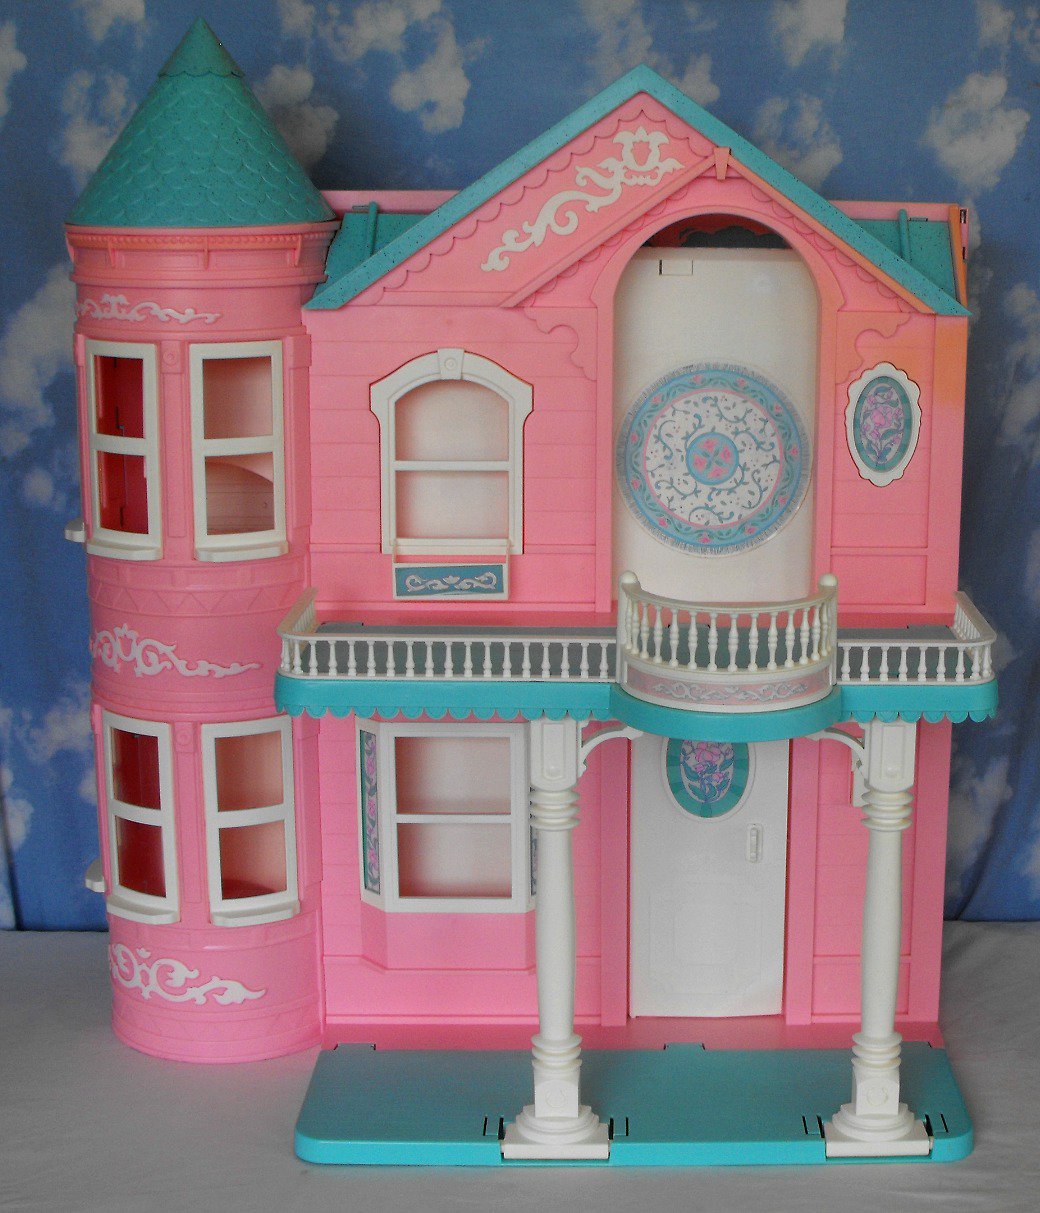 barbie 90s dream house